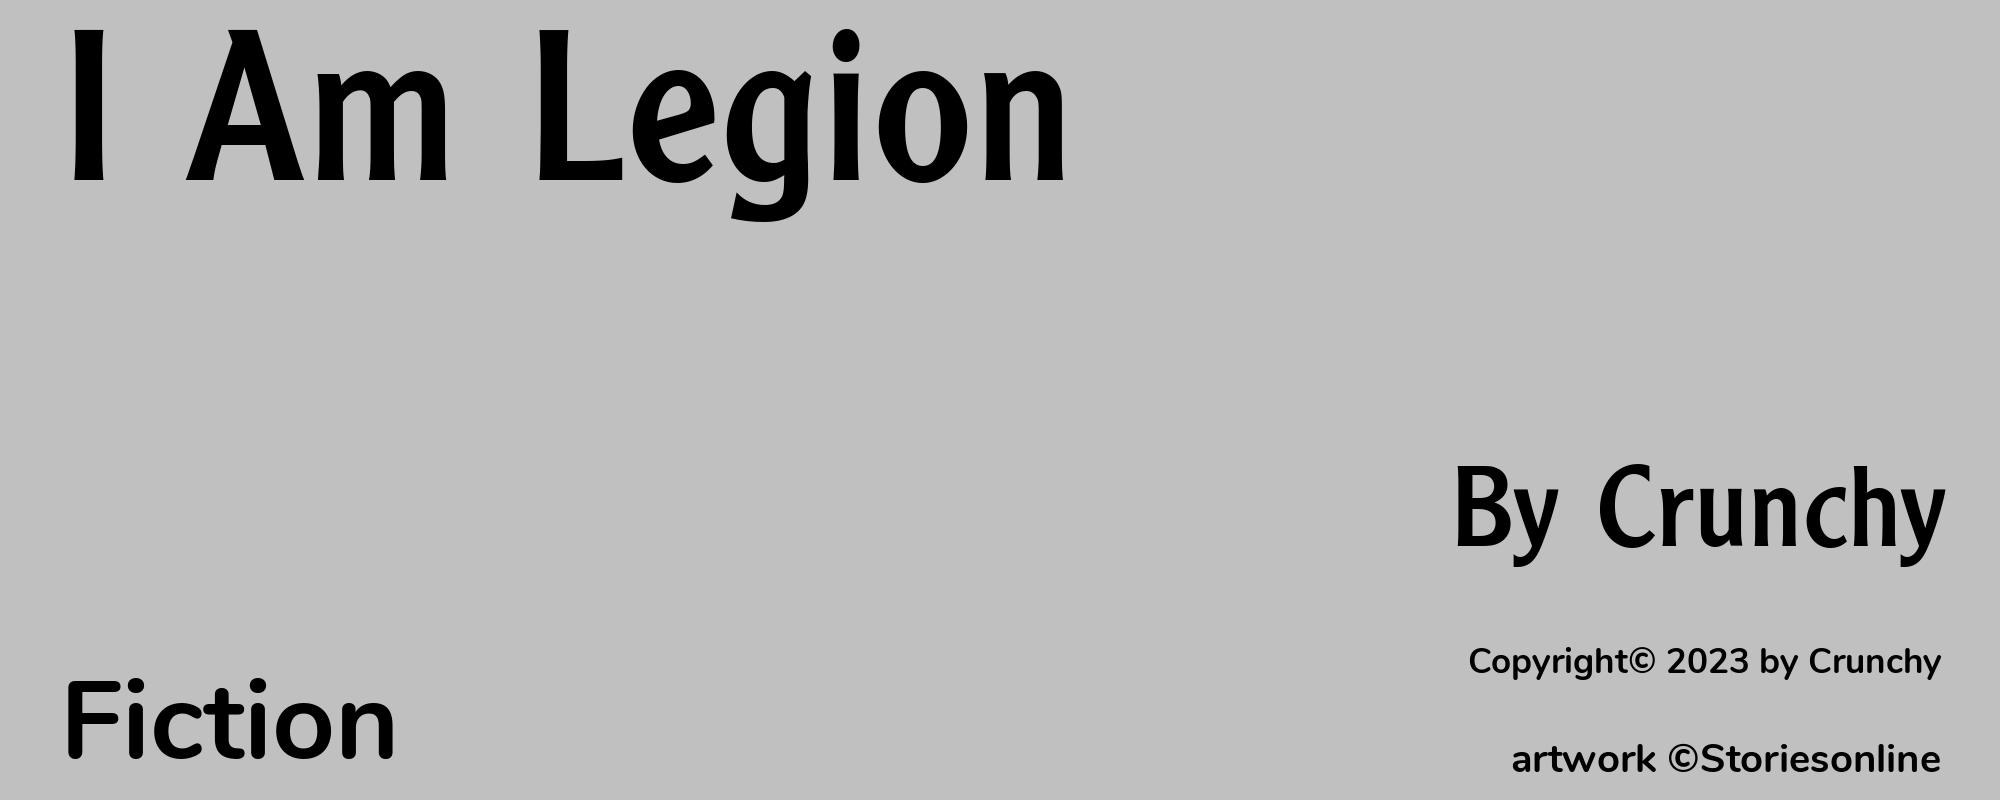 I Am Legion - Cover